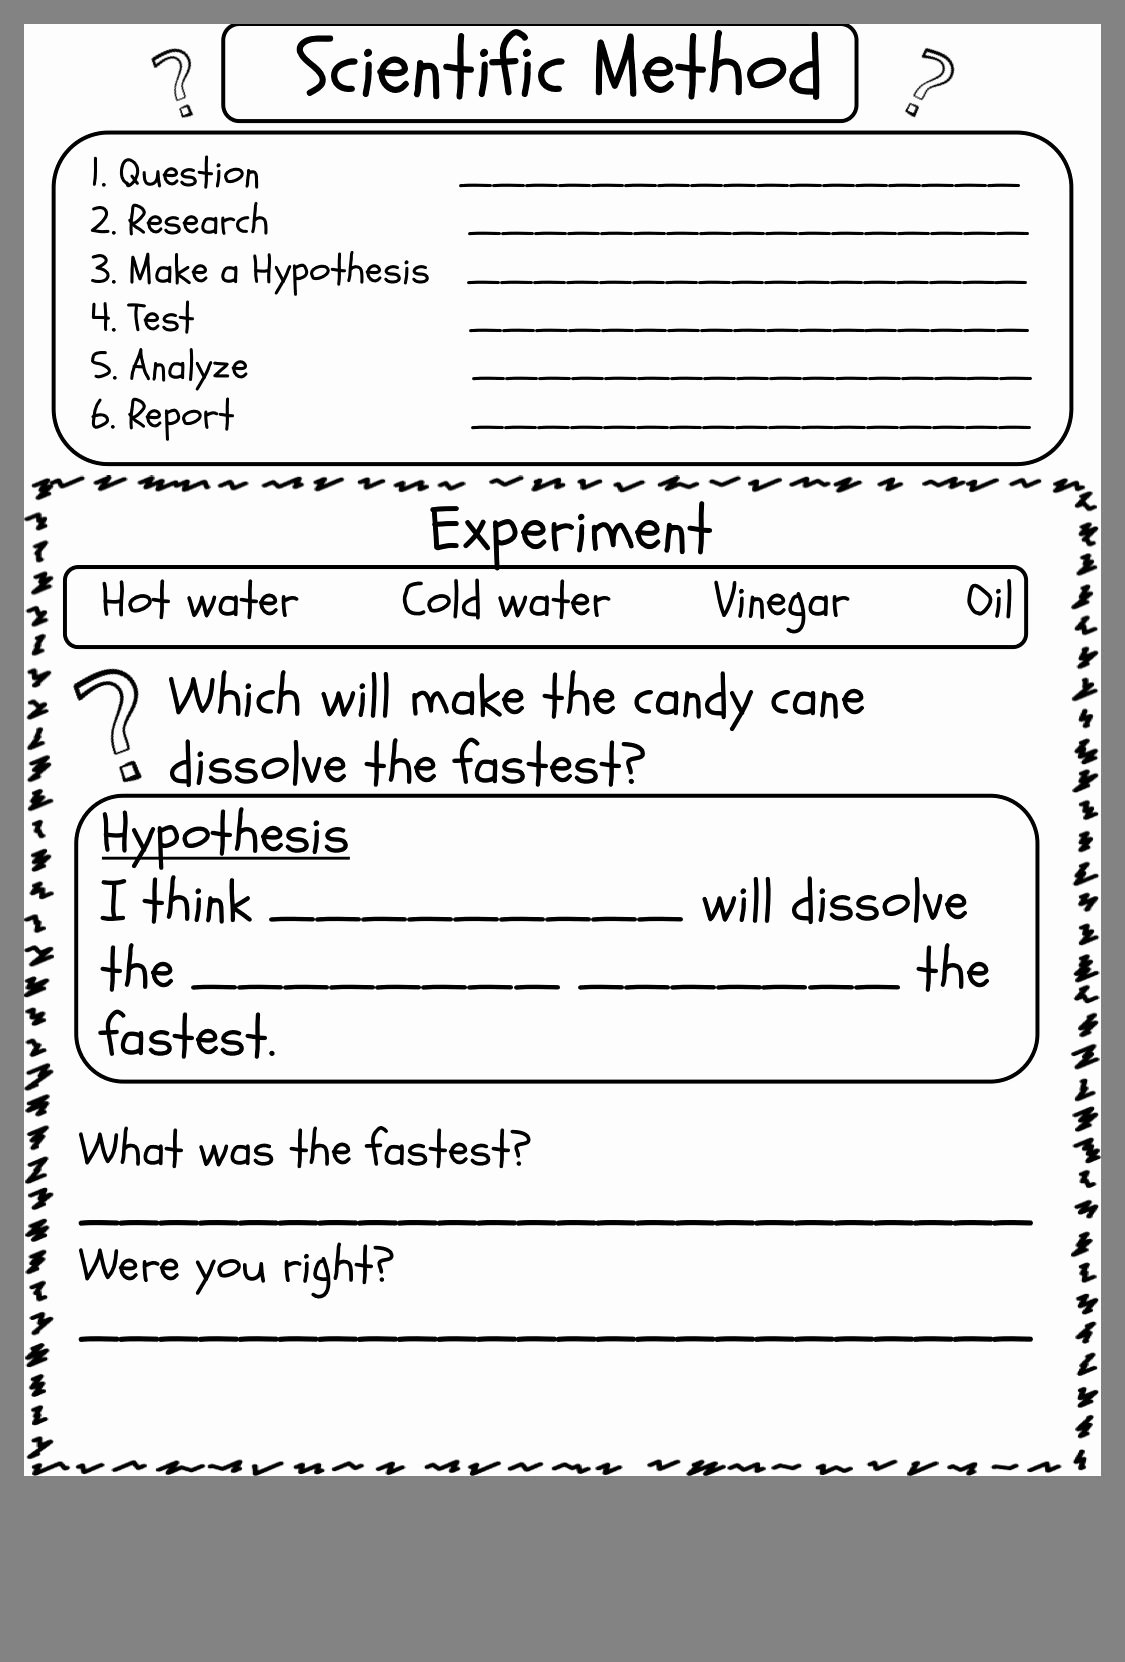 Scientific Method Worksheet Elementary Unique Scientific Method Experiment Worksheet